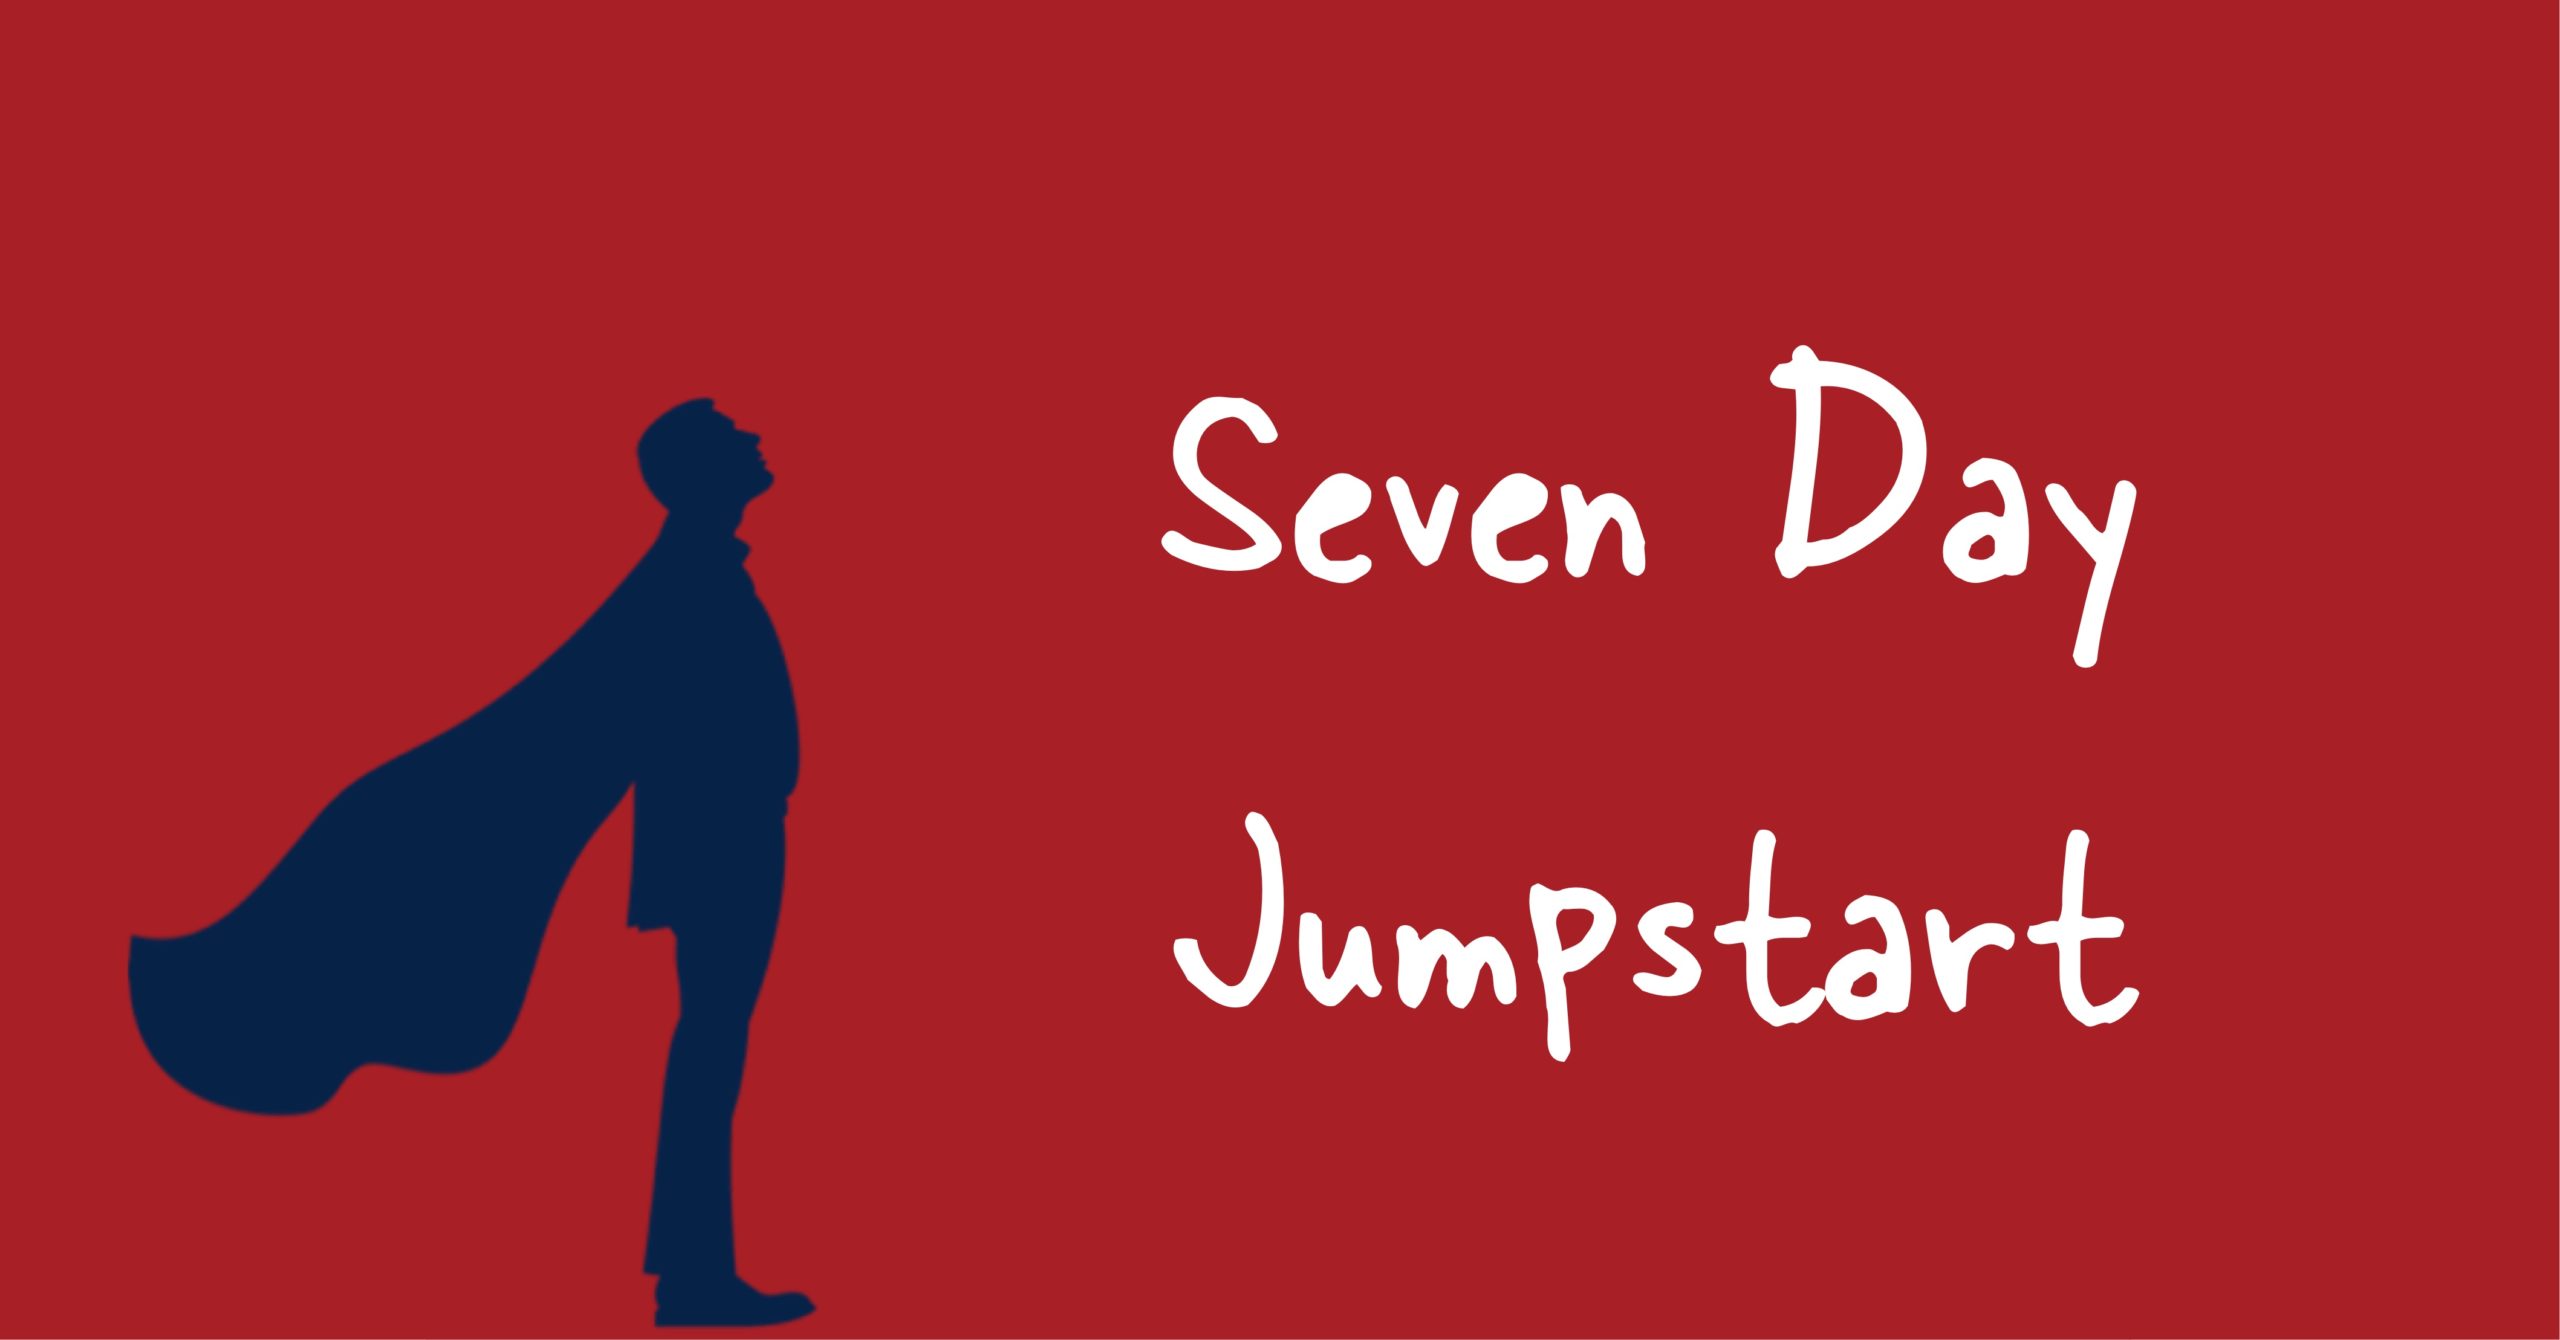 Seven Day Jumpstart